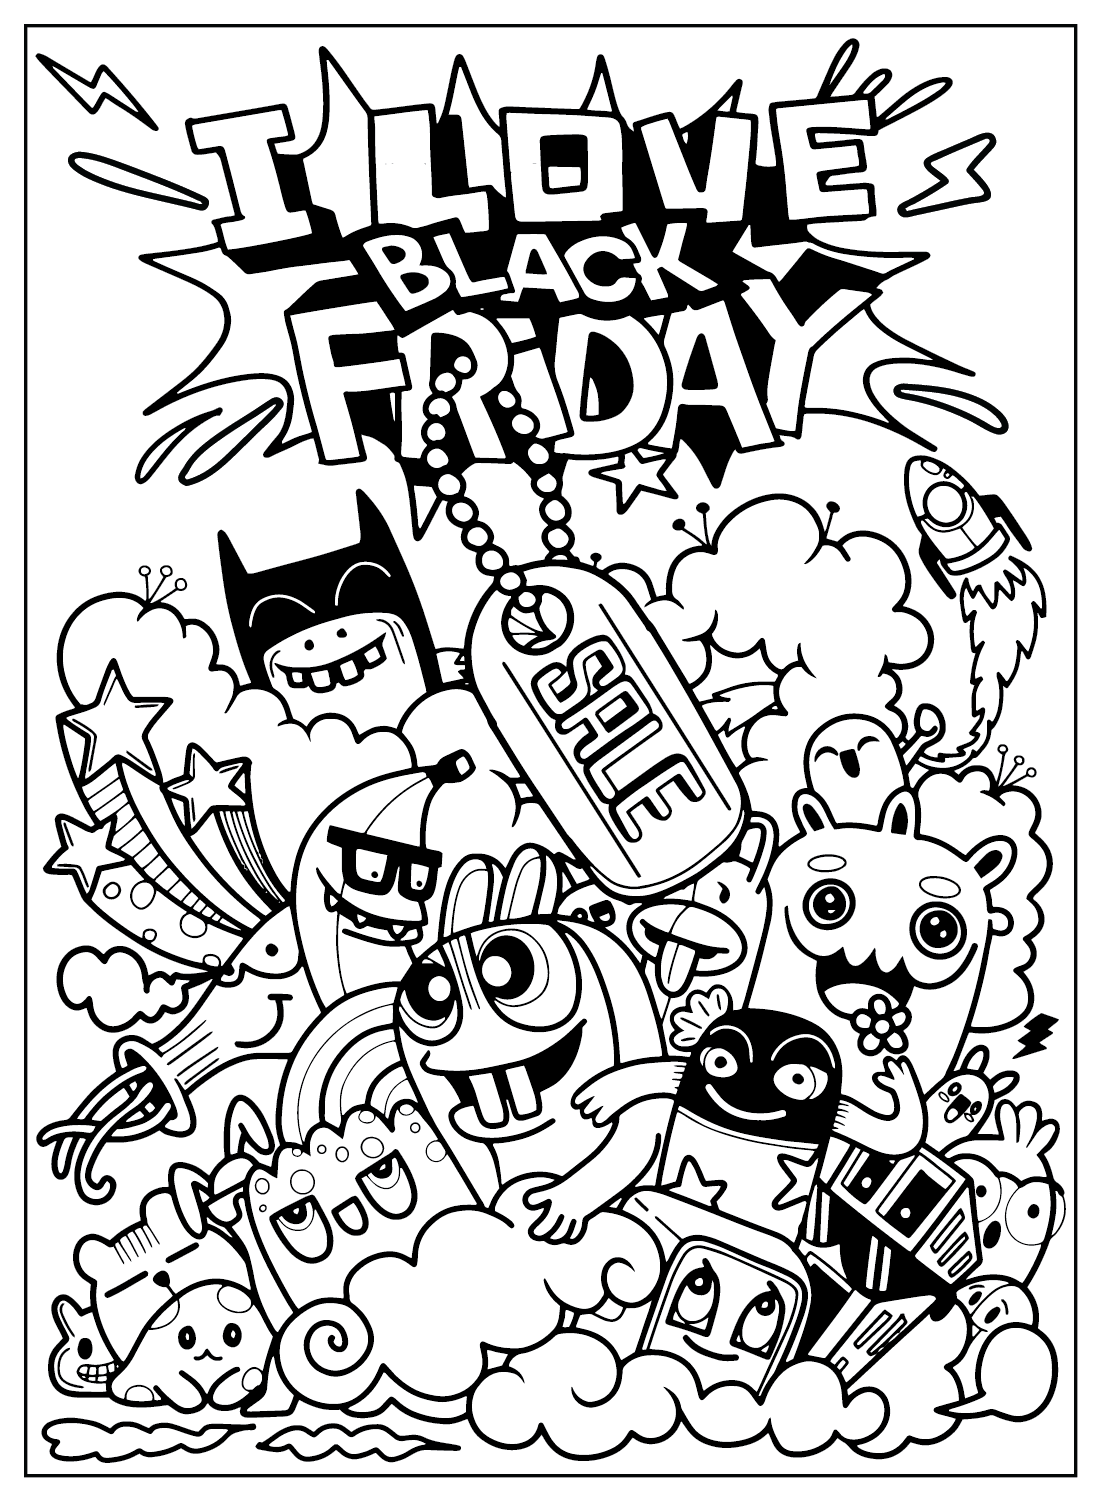 Página colorida da Black Friday da Black Friday